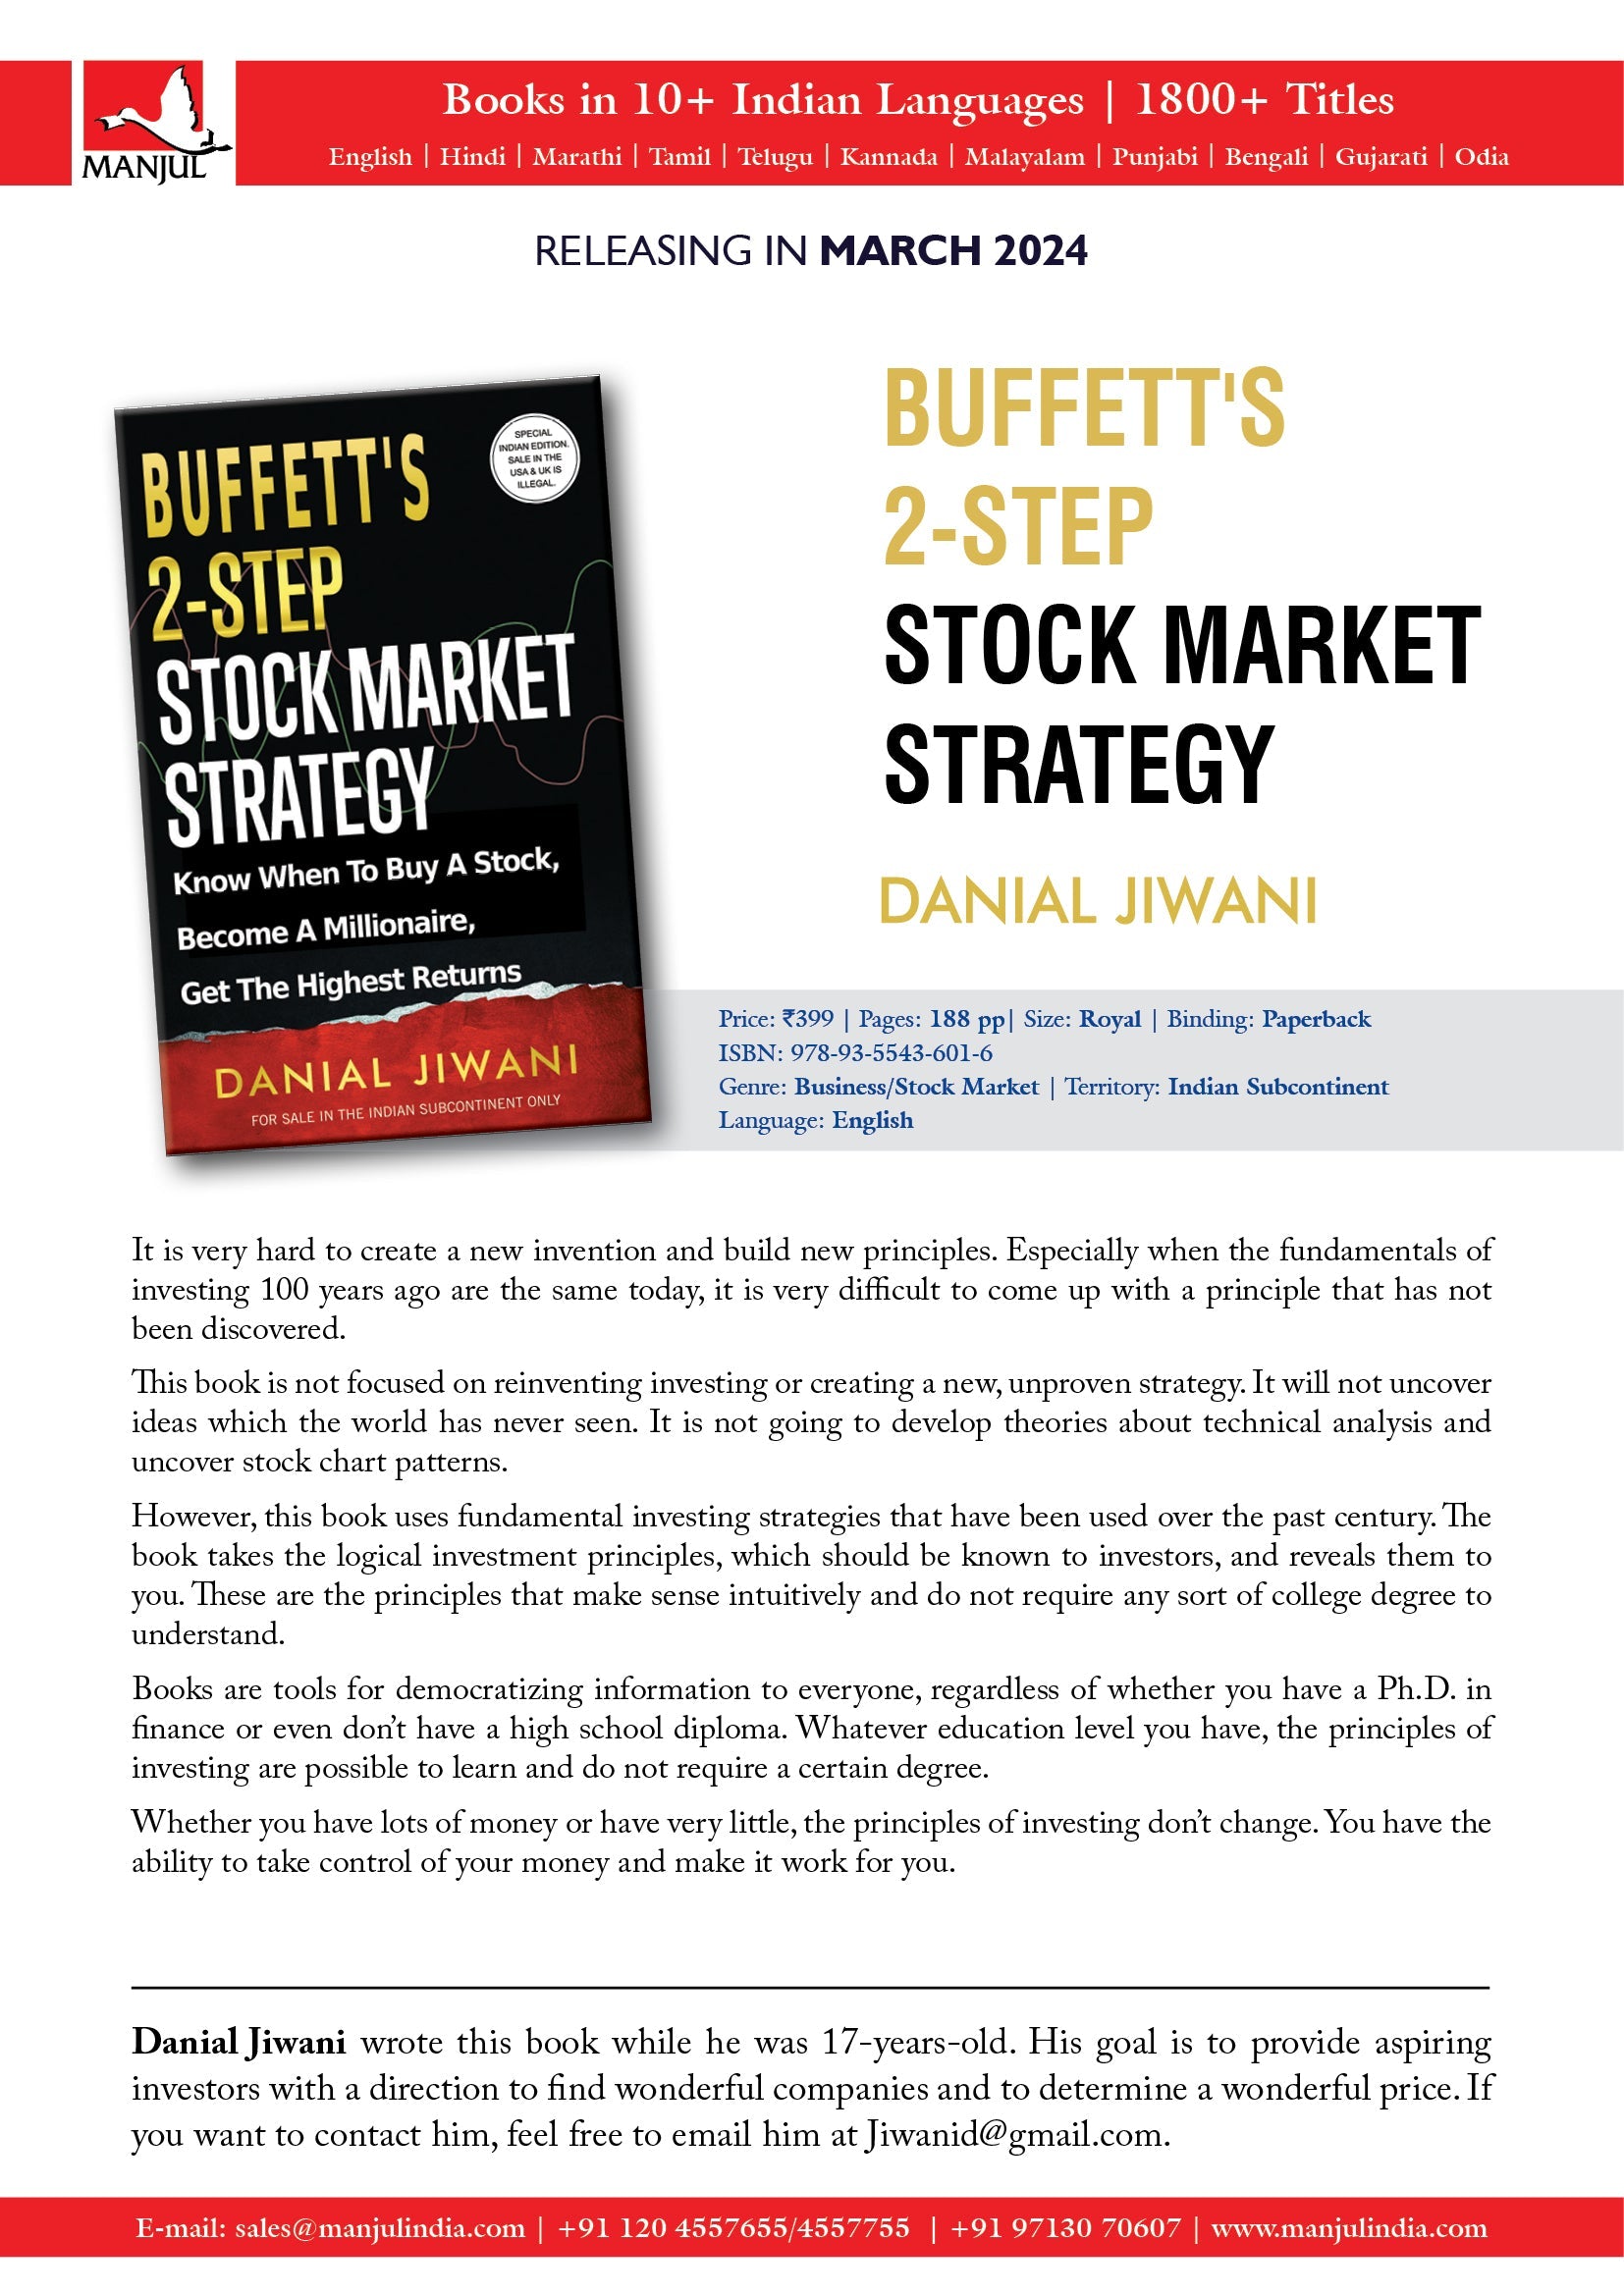 Buffett's 2 Step's Stock Market Strategy